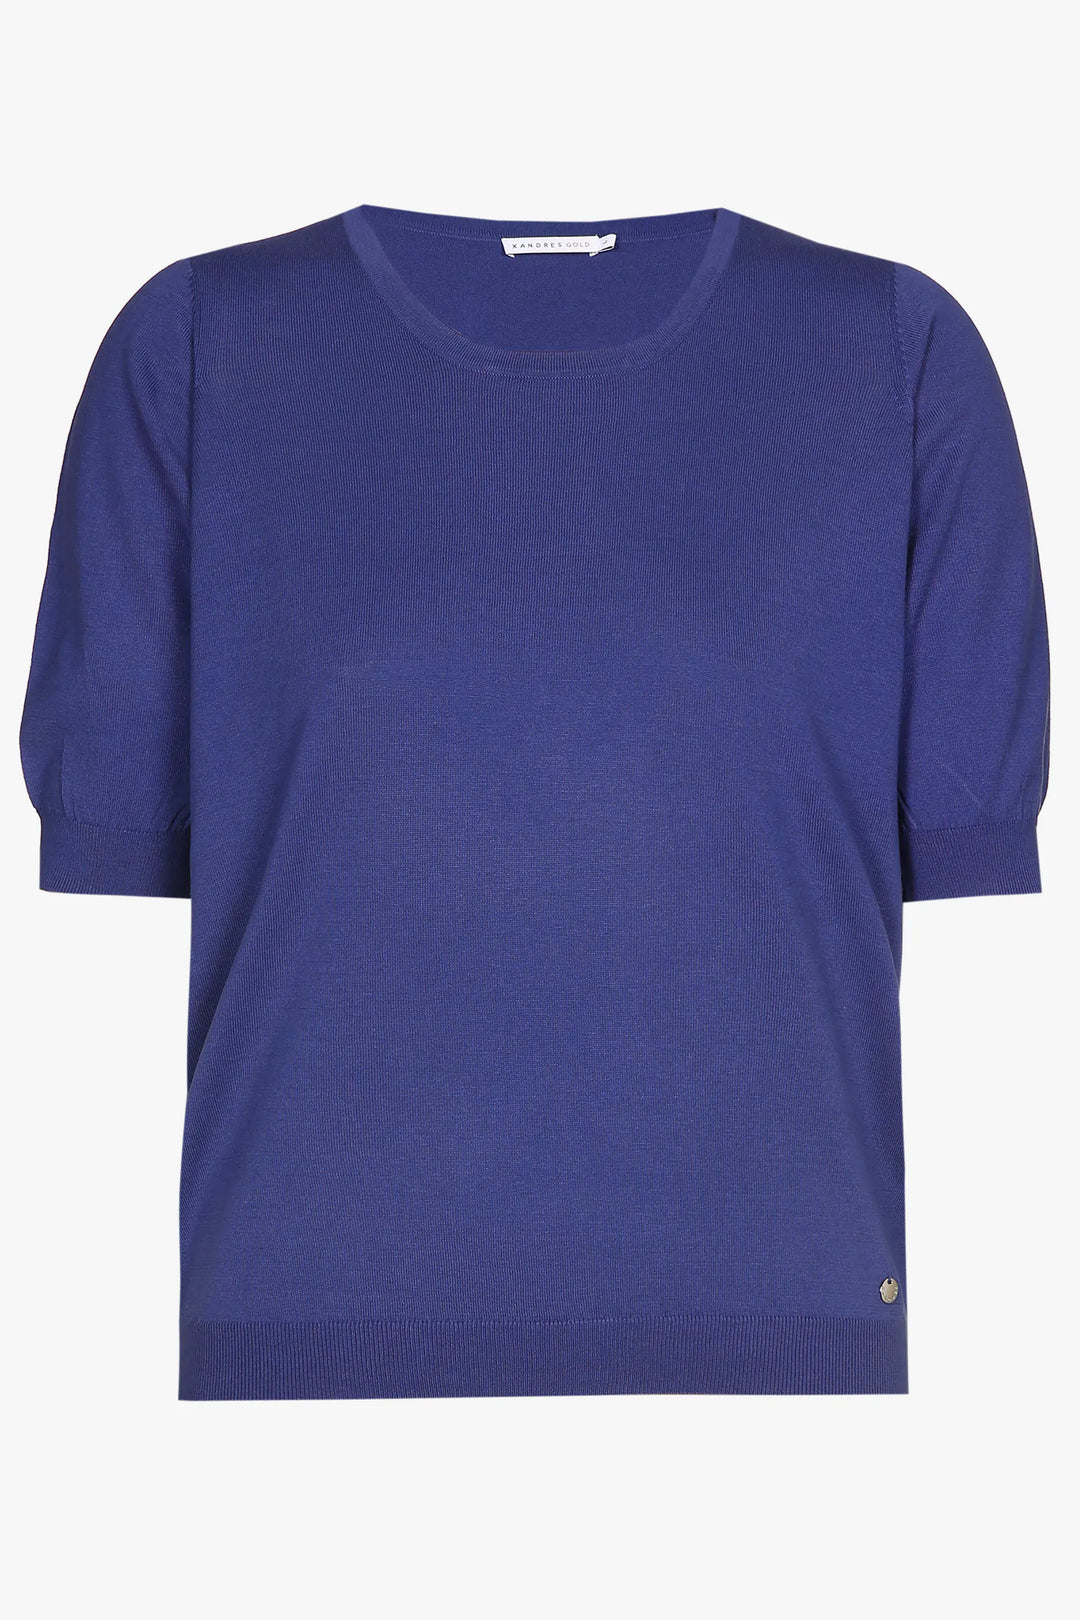 parker blue pulletje van zijdemix - xandres - - grote maten - dameskleding - kledingwinkel - herent - leuven